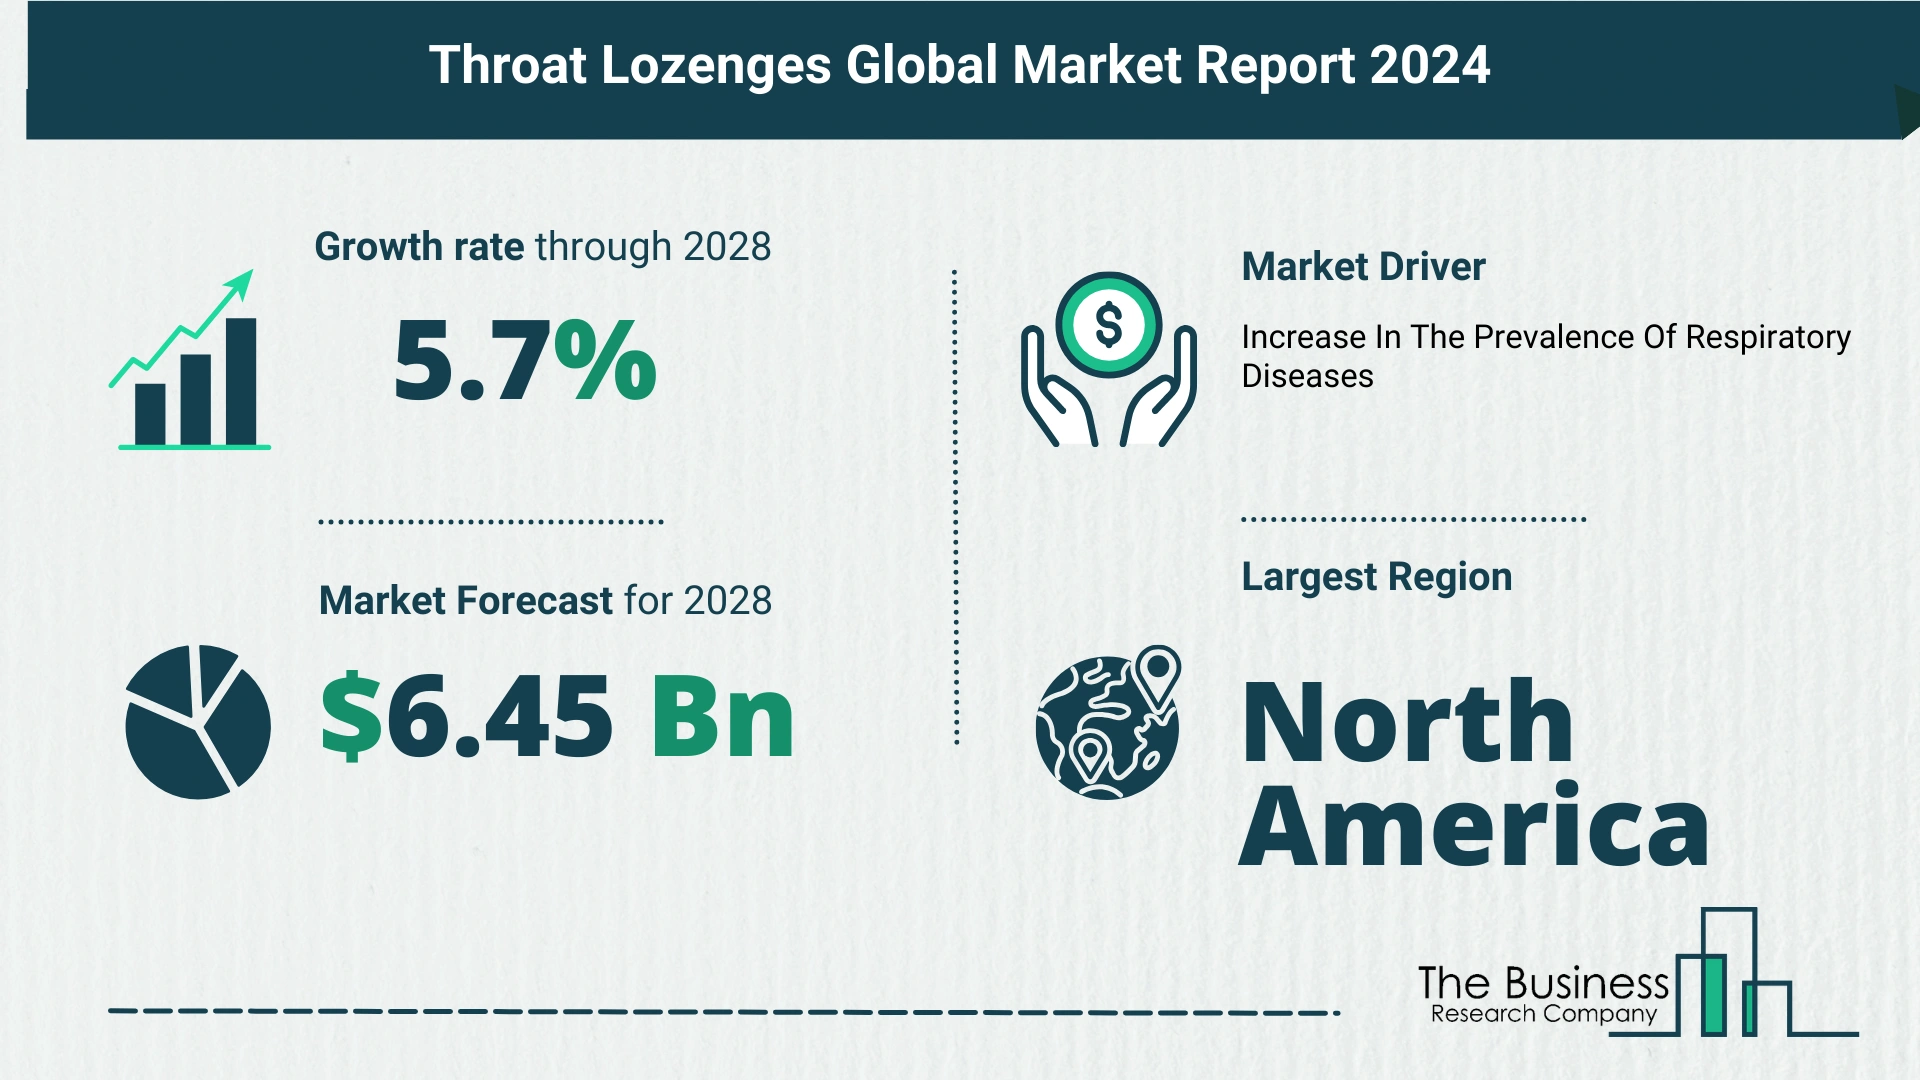 Global Throat Lozenges Market Size